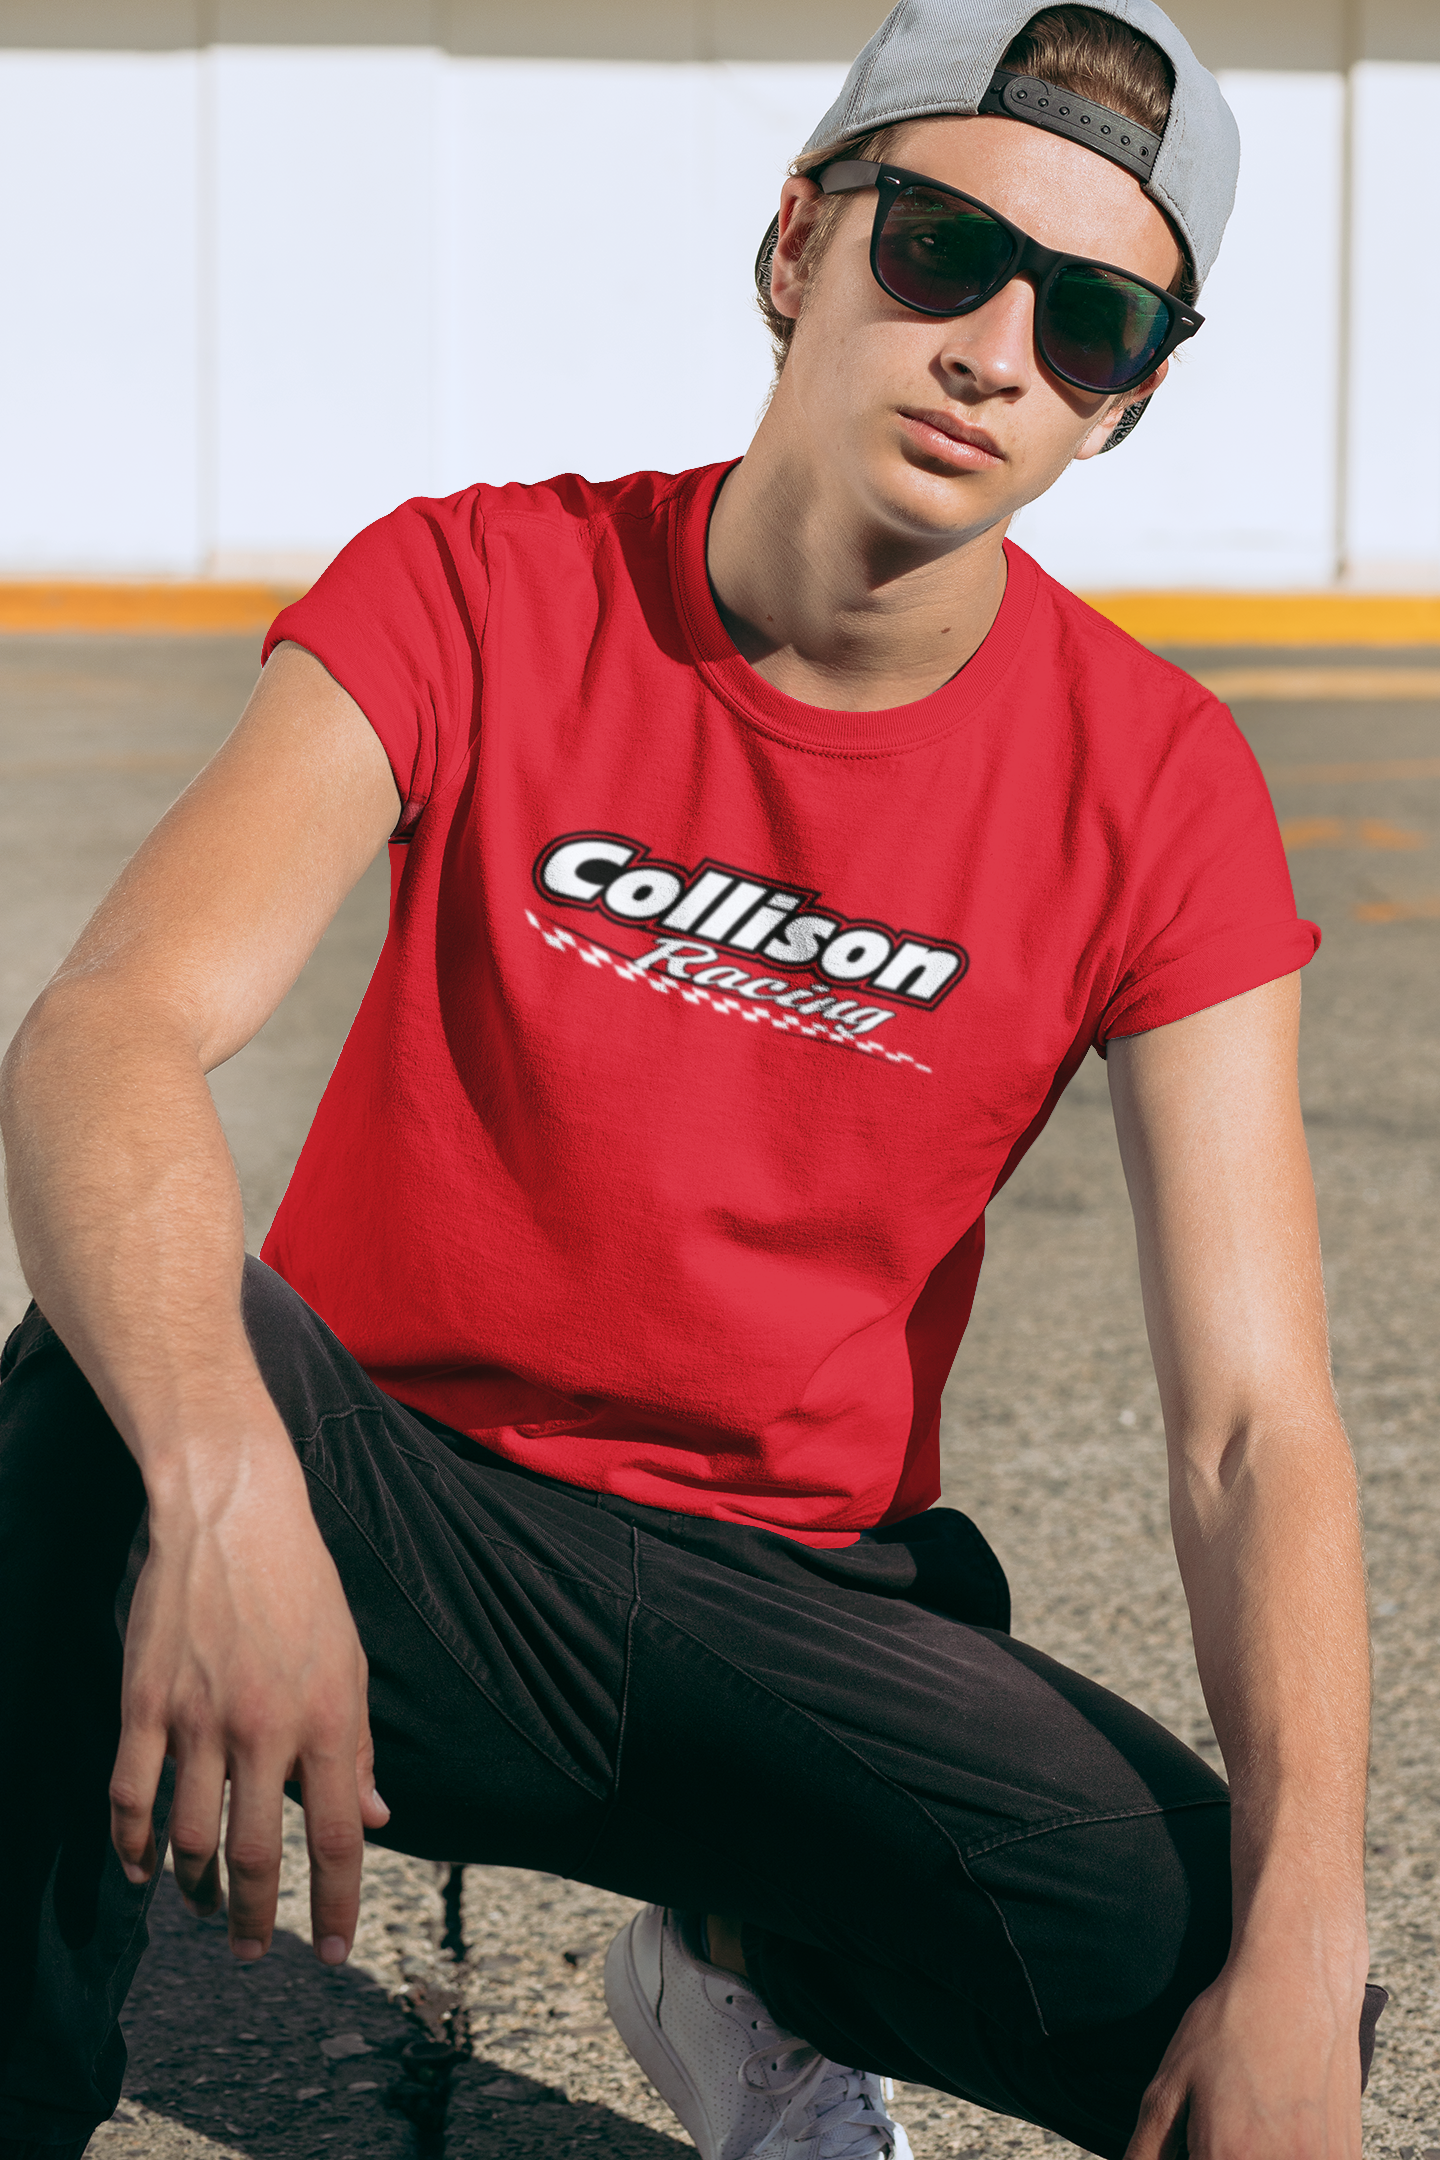 Collison Racing Men's T-Shirt (S-XL)